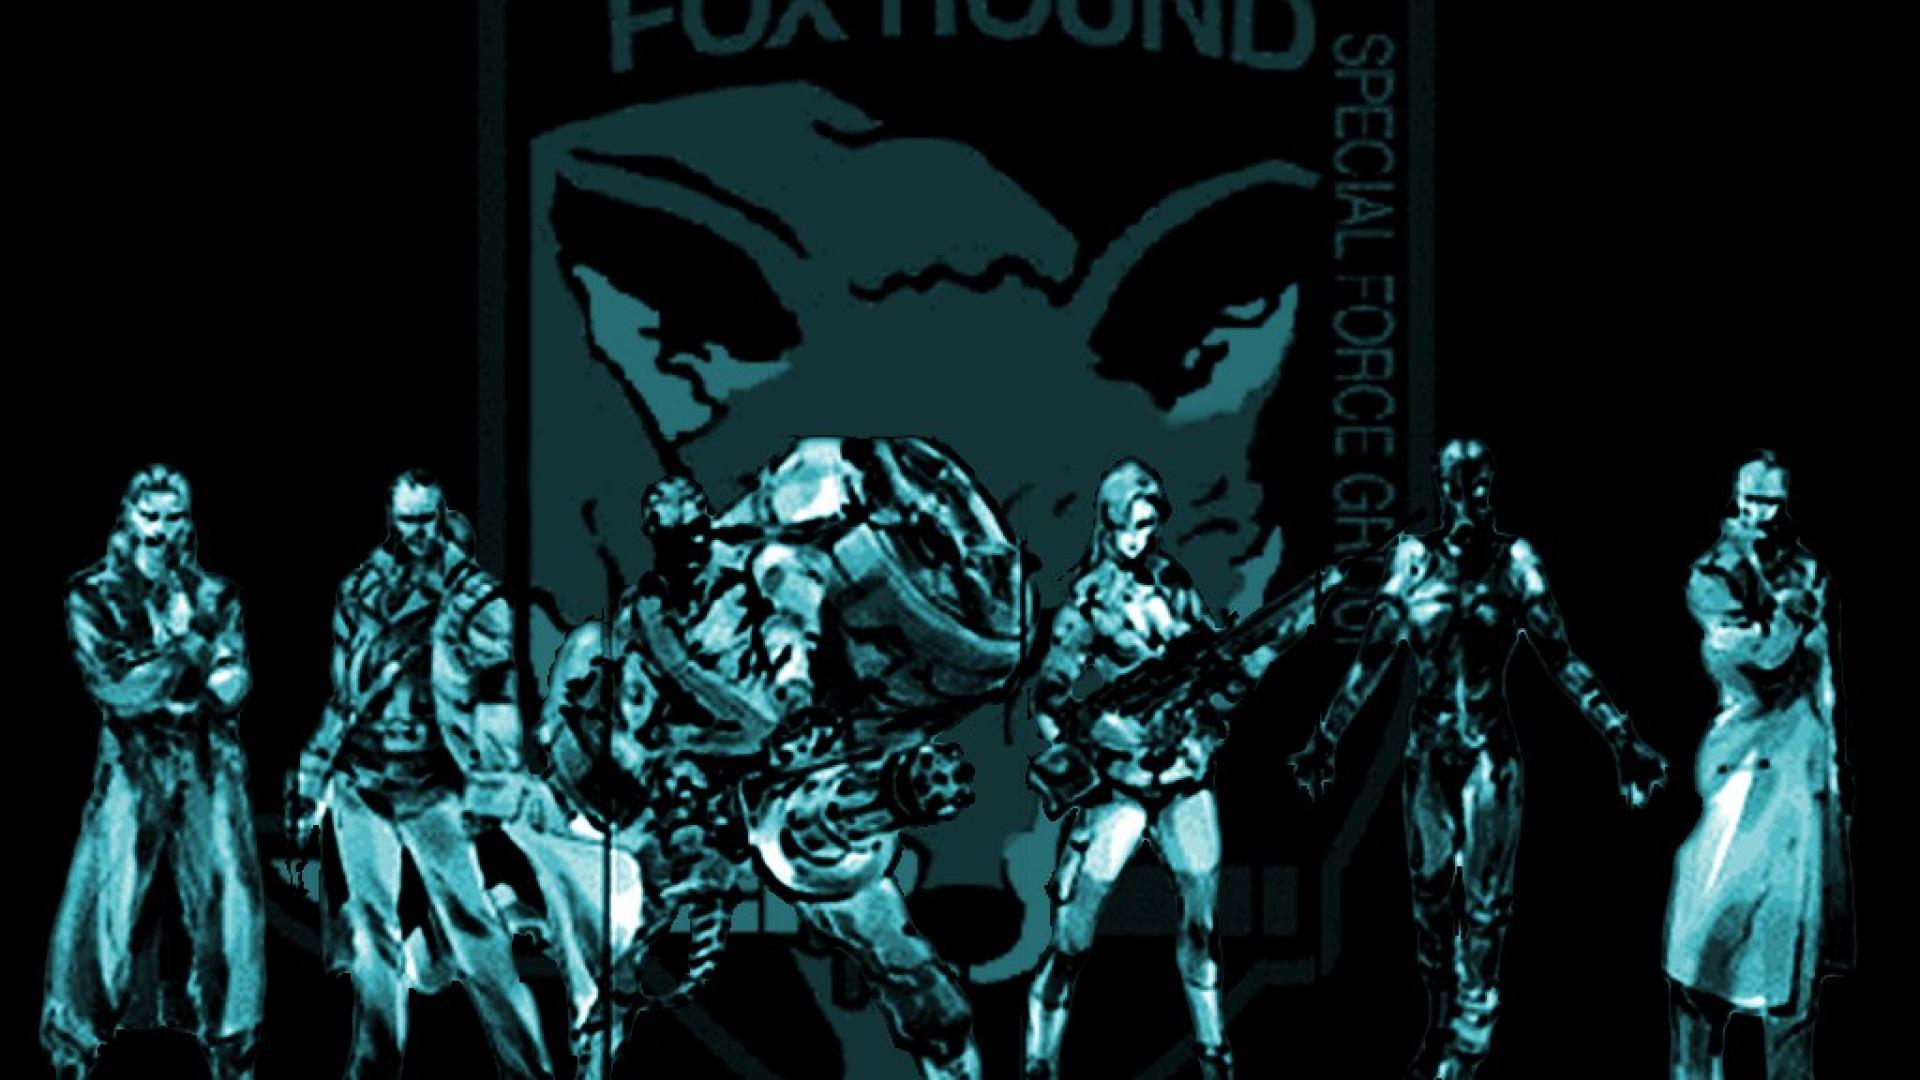 Metal gear solid fox hound hd wallpaper - - HQ Desktop